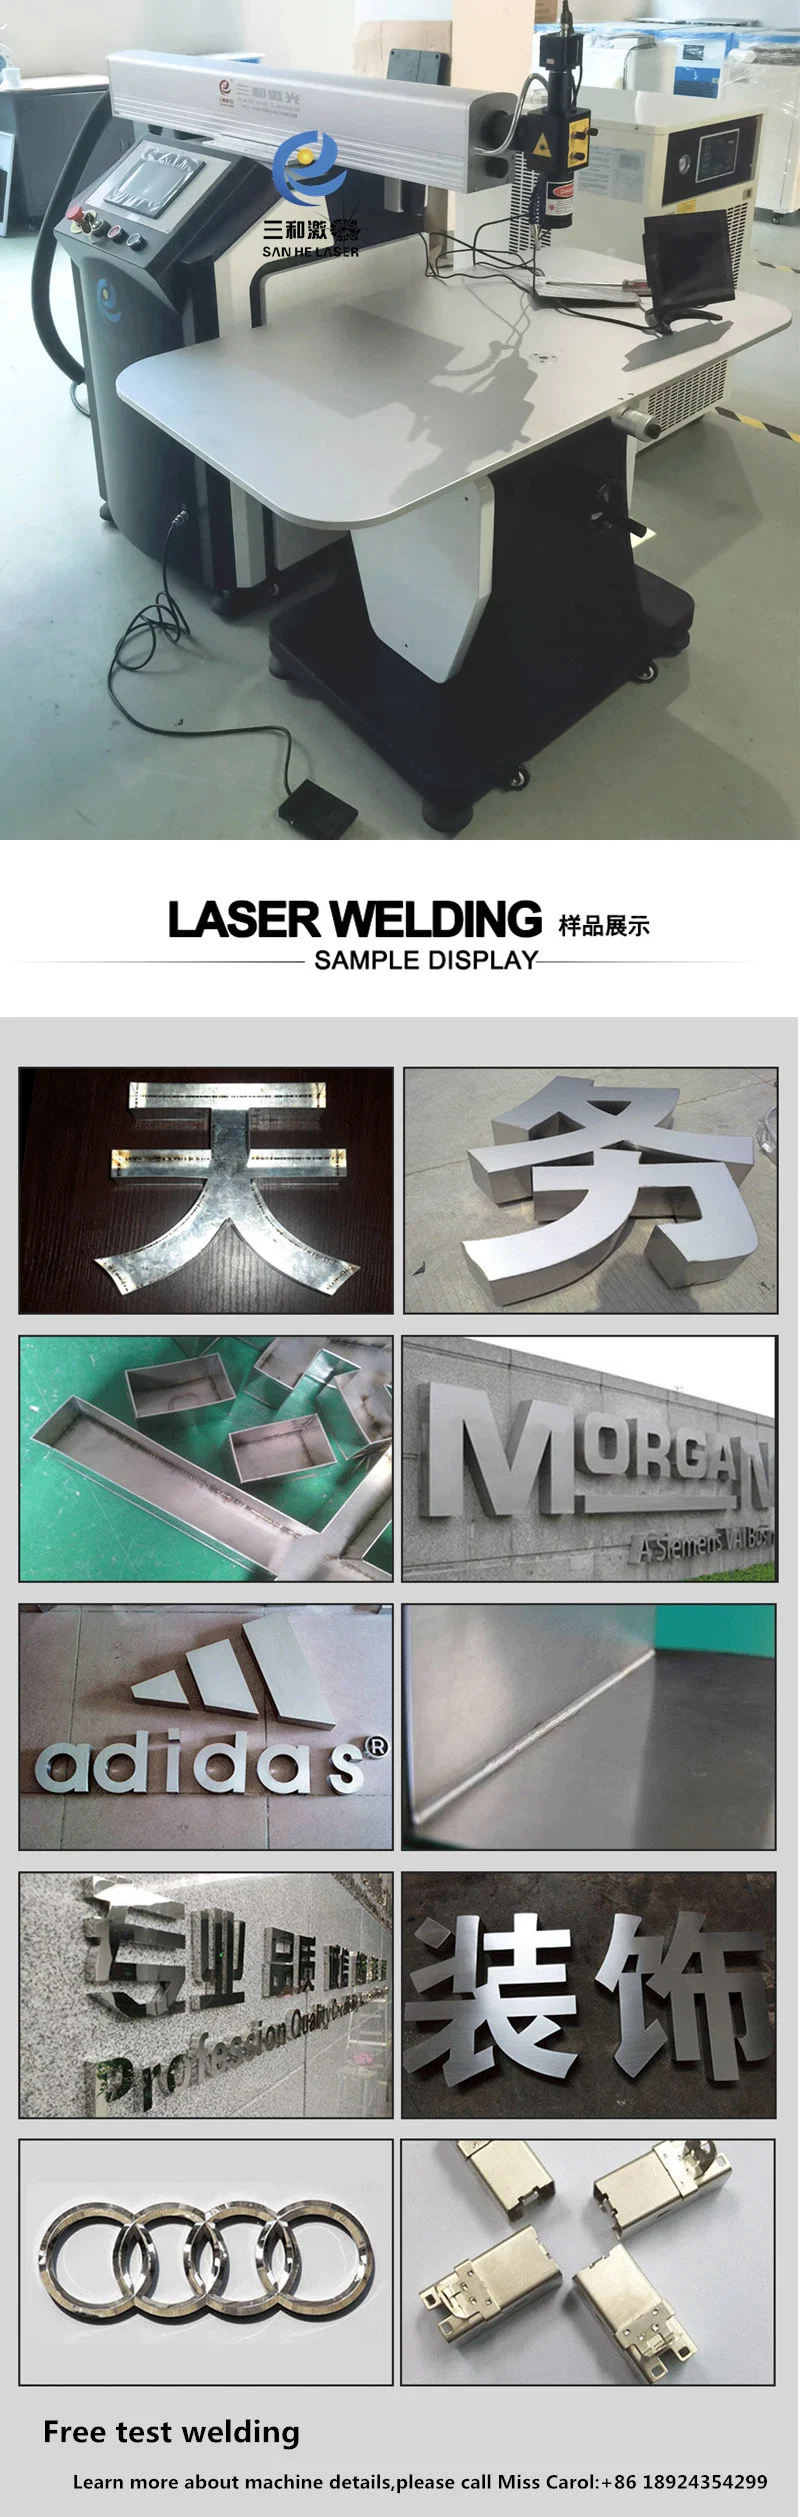 3D Advertising Word Laser Welder CNC Advertising Letter Welding Machine